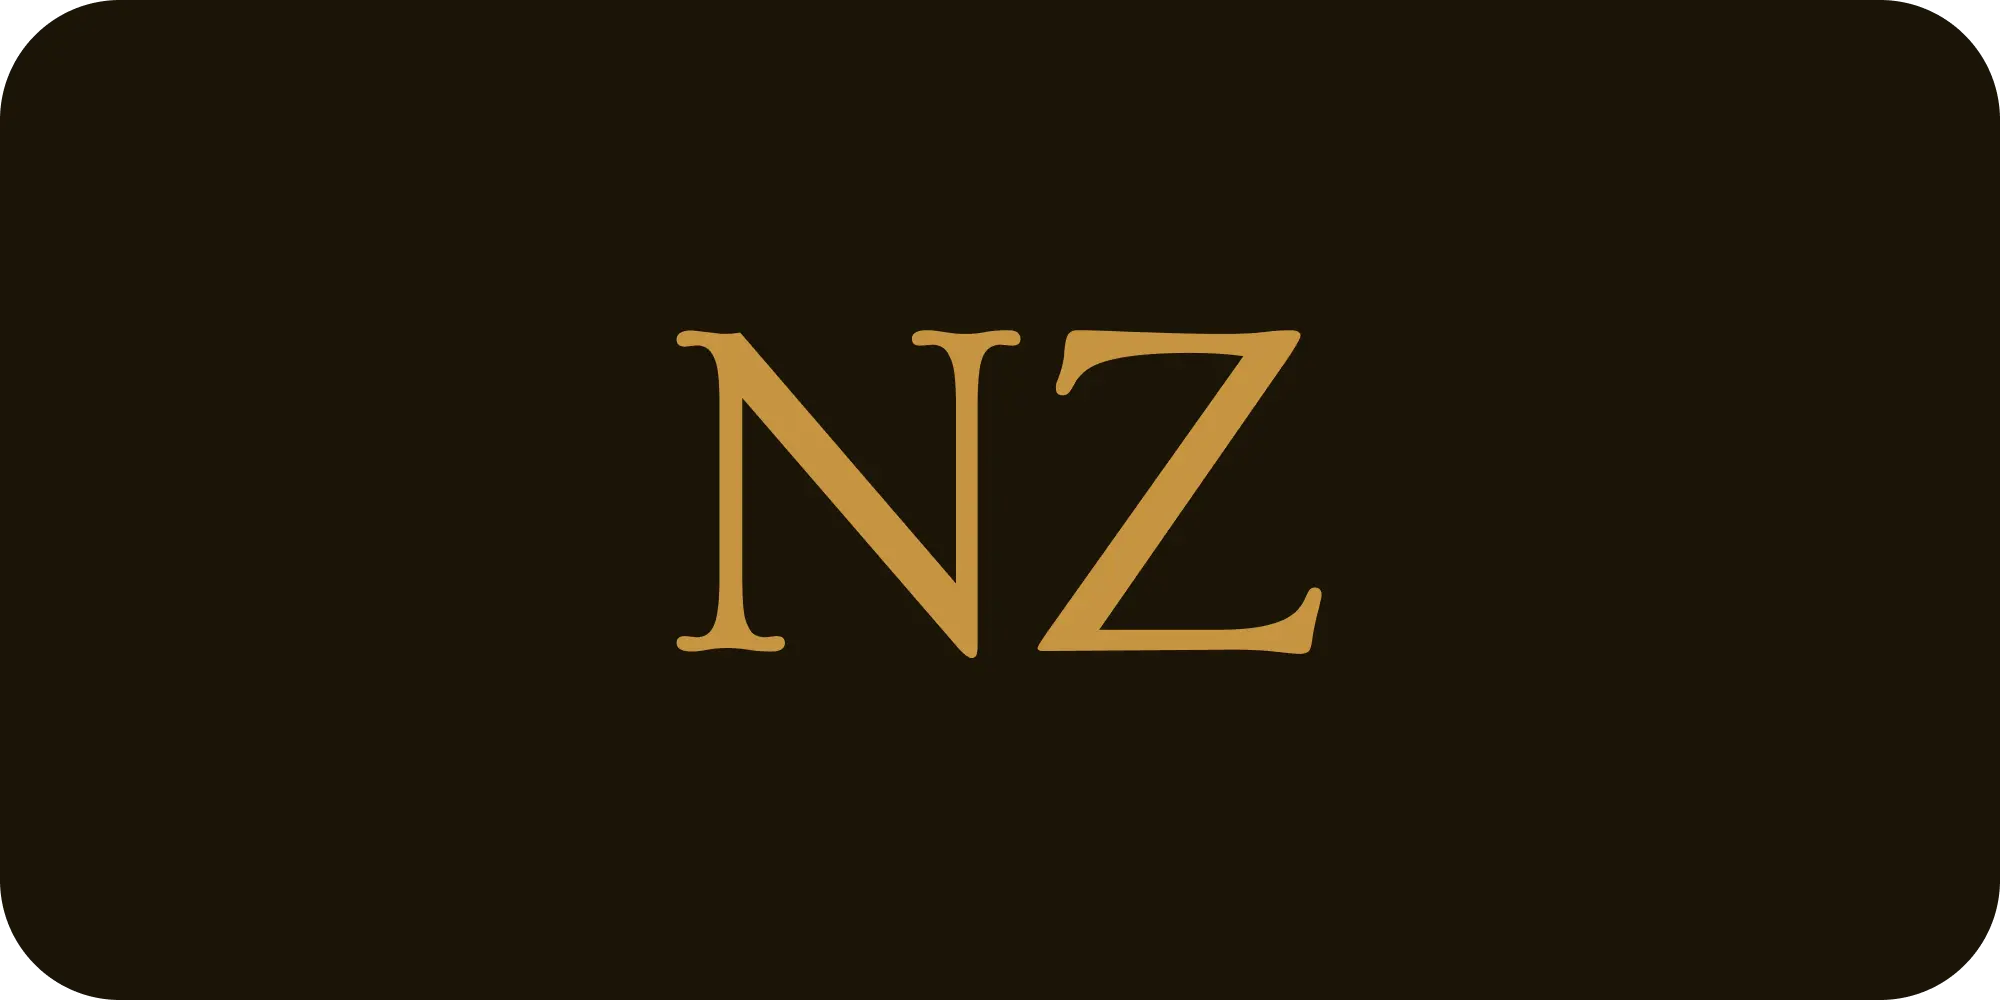 Nitinz Logo